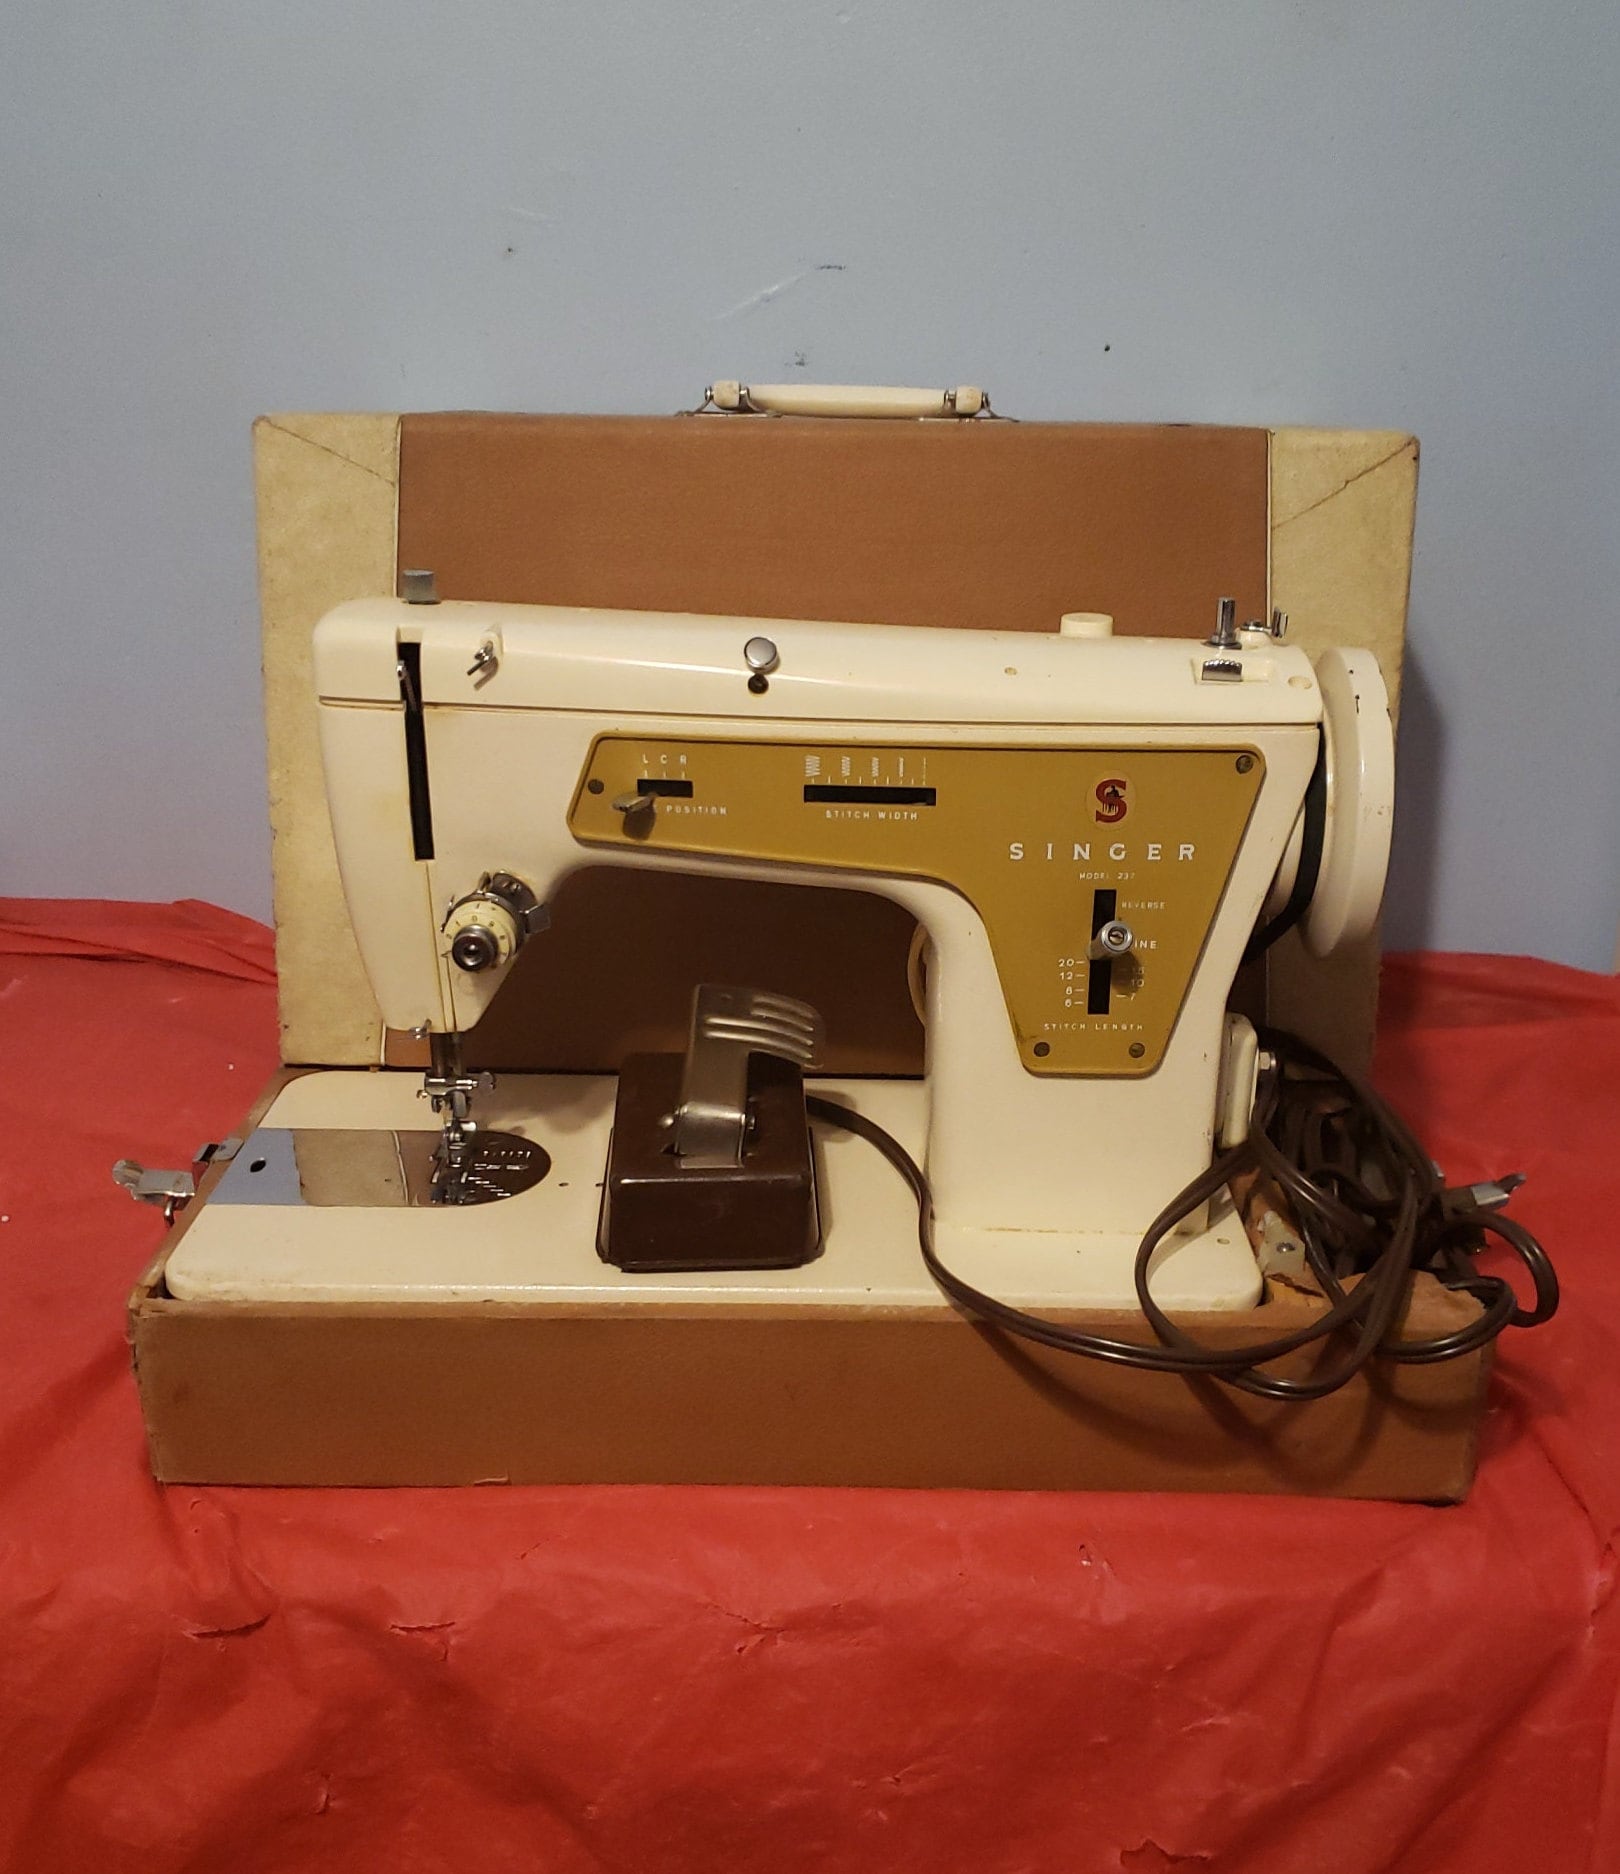 SINGER® Sewing Machine Carry Case : SINGER®